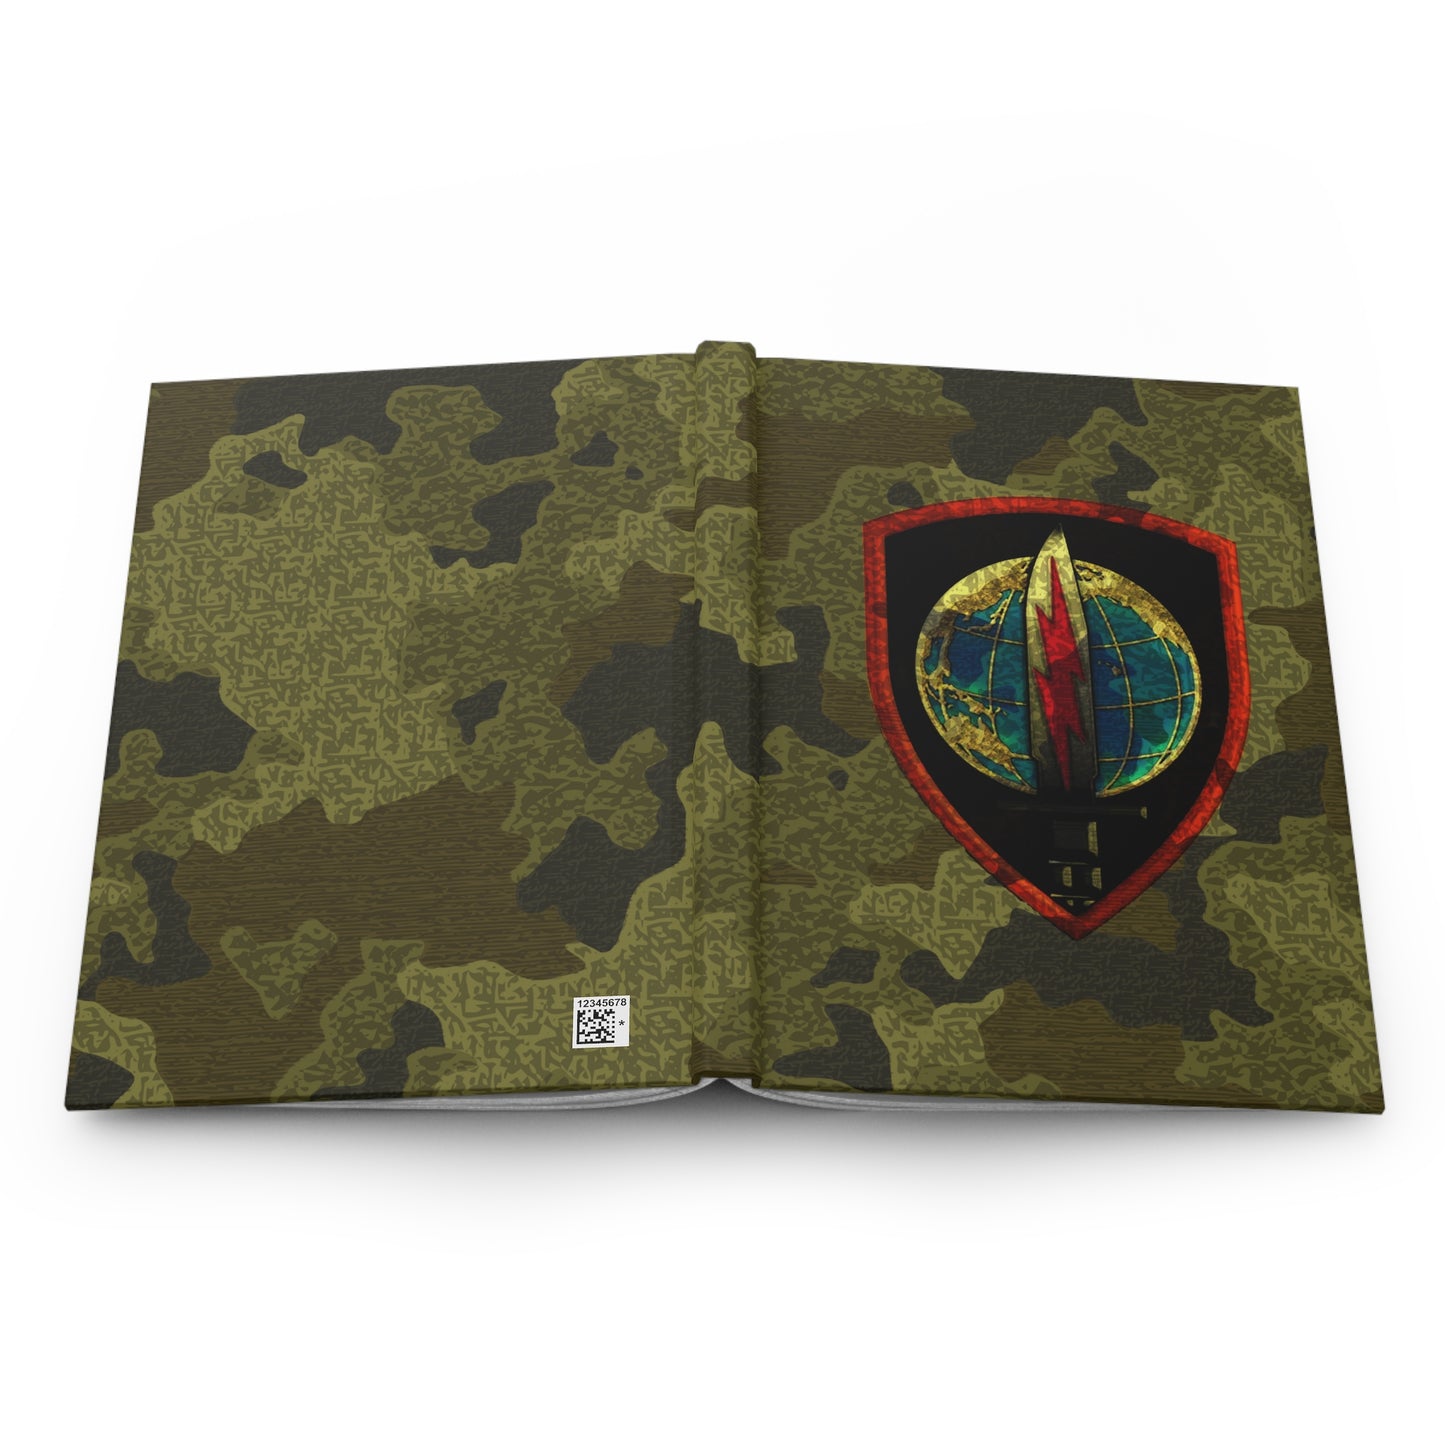 USINDOPACOM Army Element Colored DUI Hardcover Leader Book